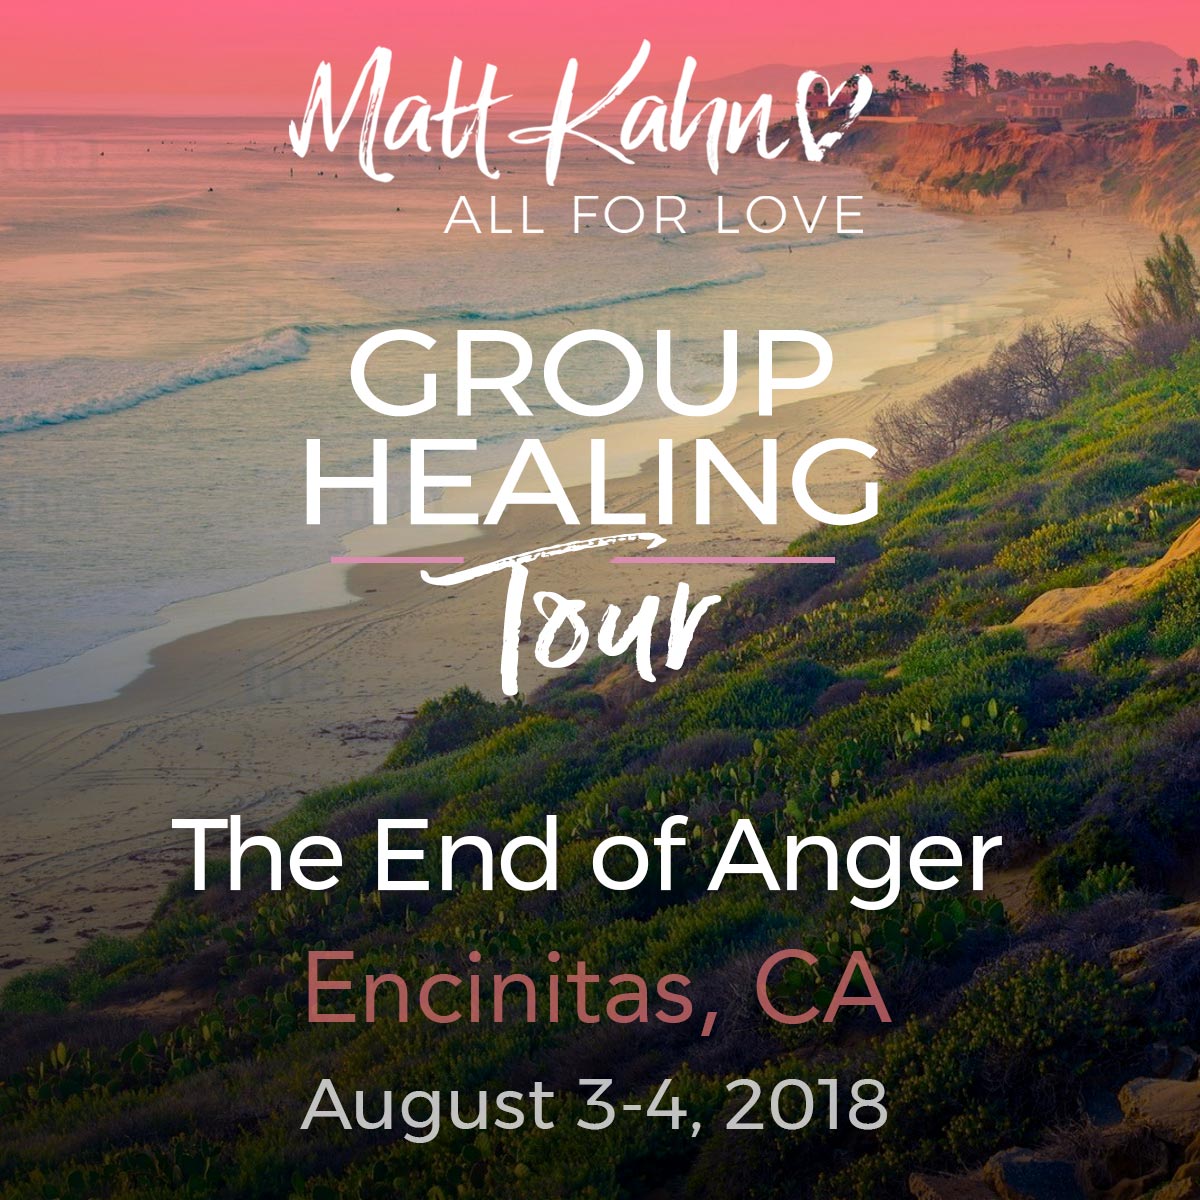 Group Healing Tour Encinitas, California